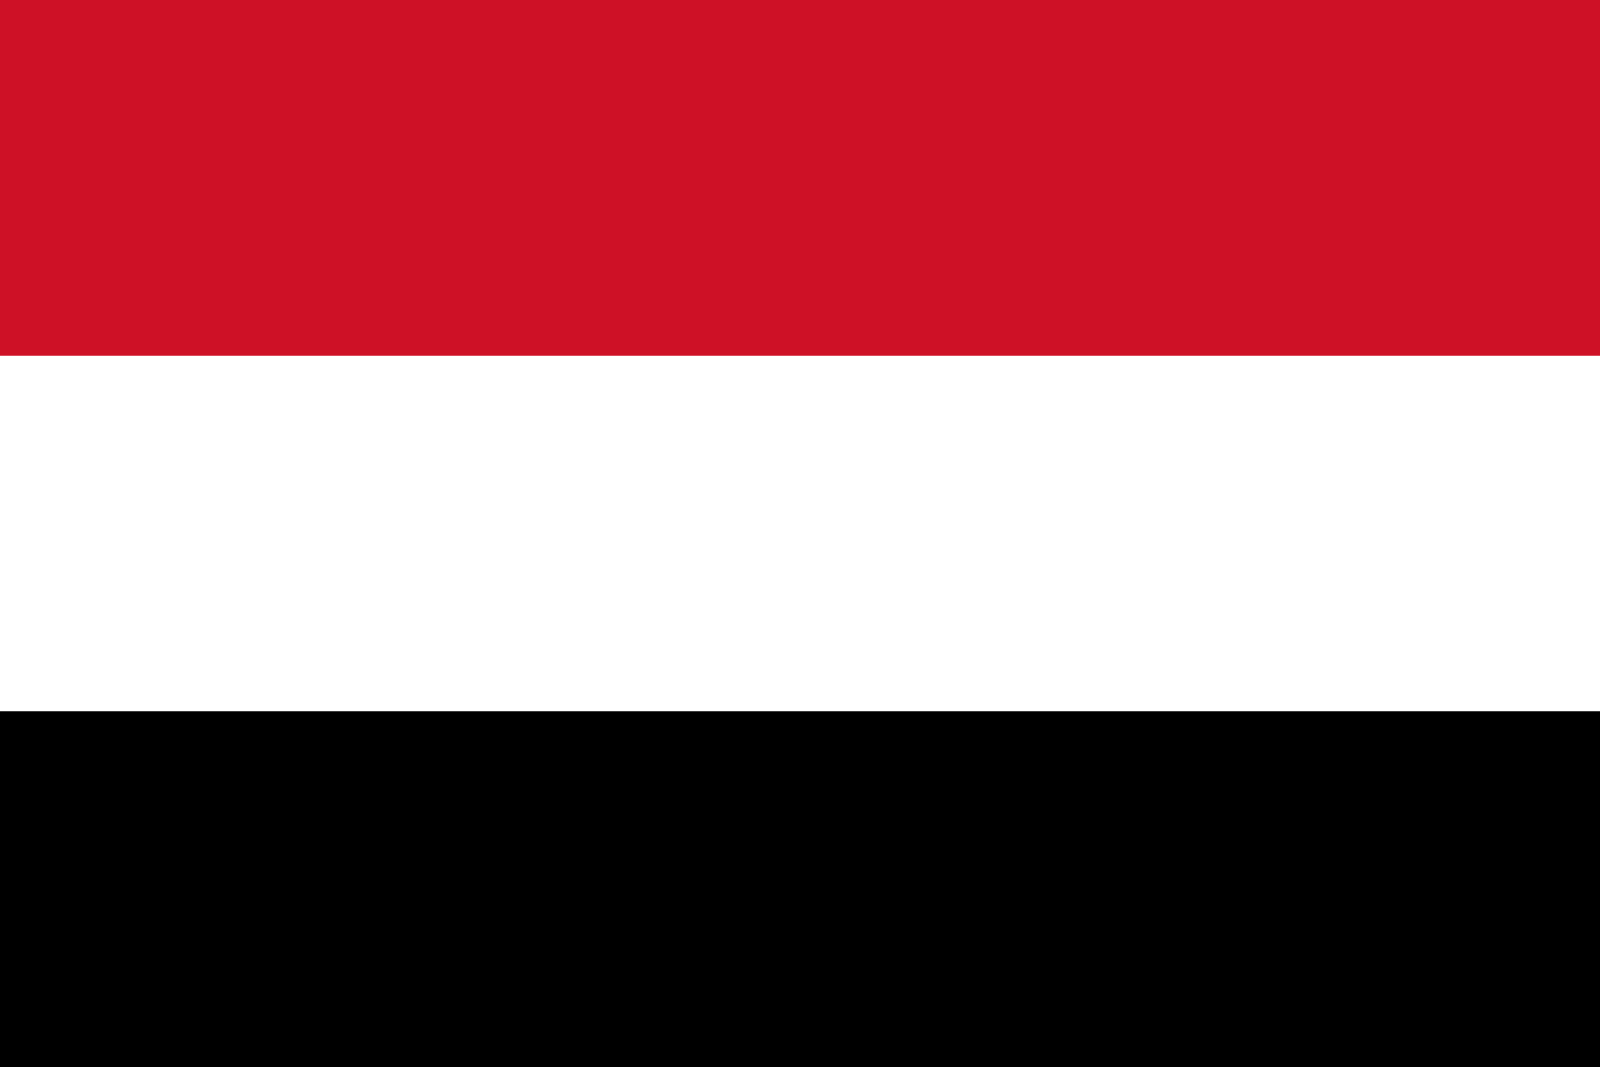 Flagge des Jemen | Welt-Flaggen.de